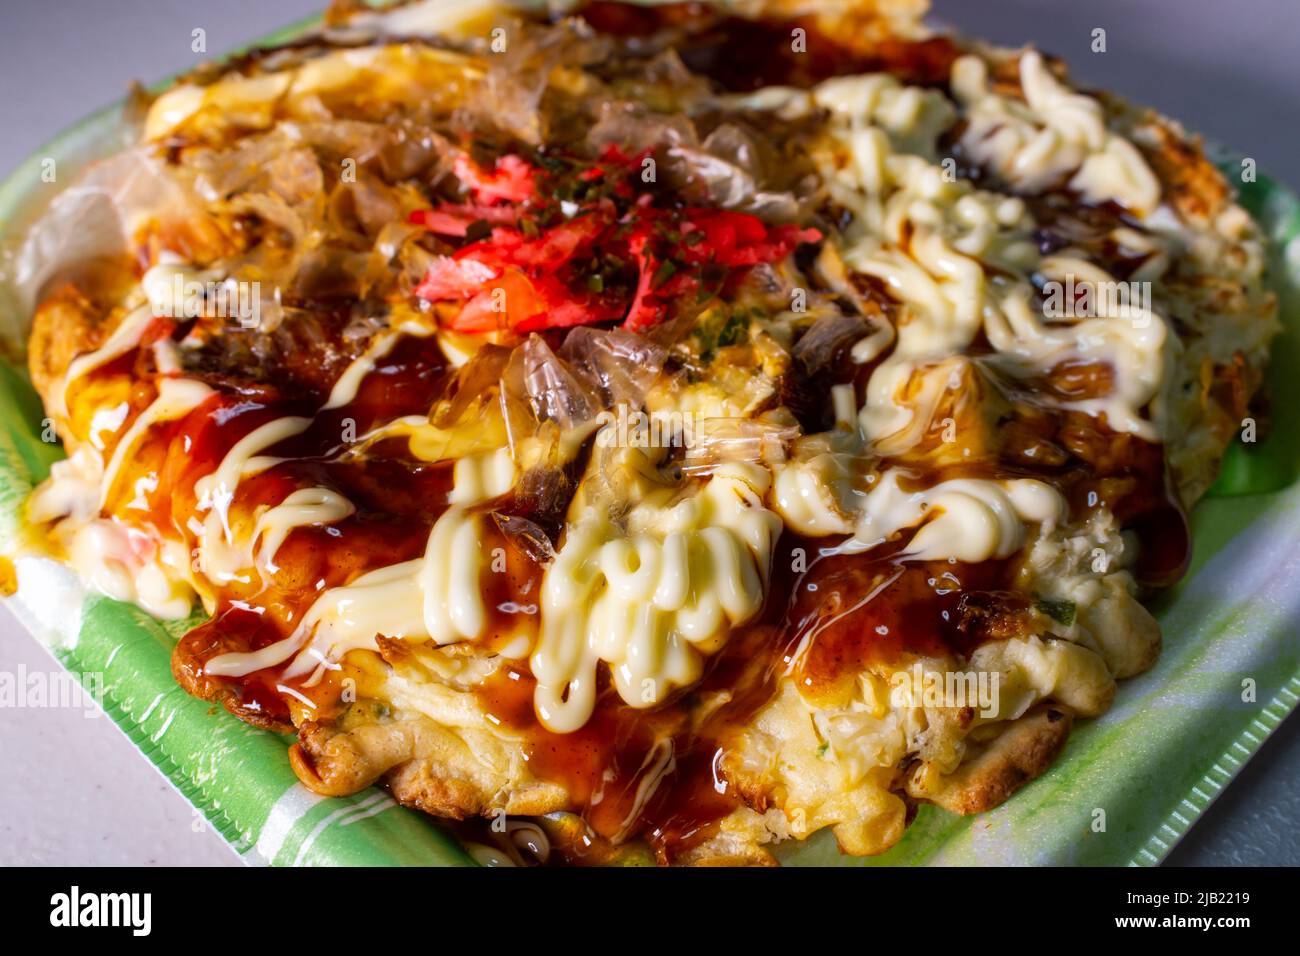 Okonomiyaki, Japanese pancake dish consisting of wheat flour batter & other ingredients, topped with mayonnaise & okonomiyaki sauces in the food tray Stock Photo